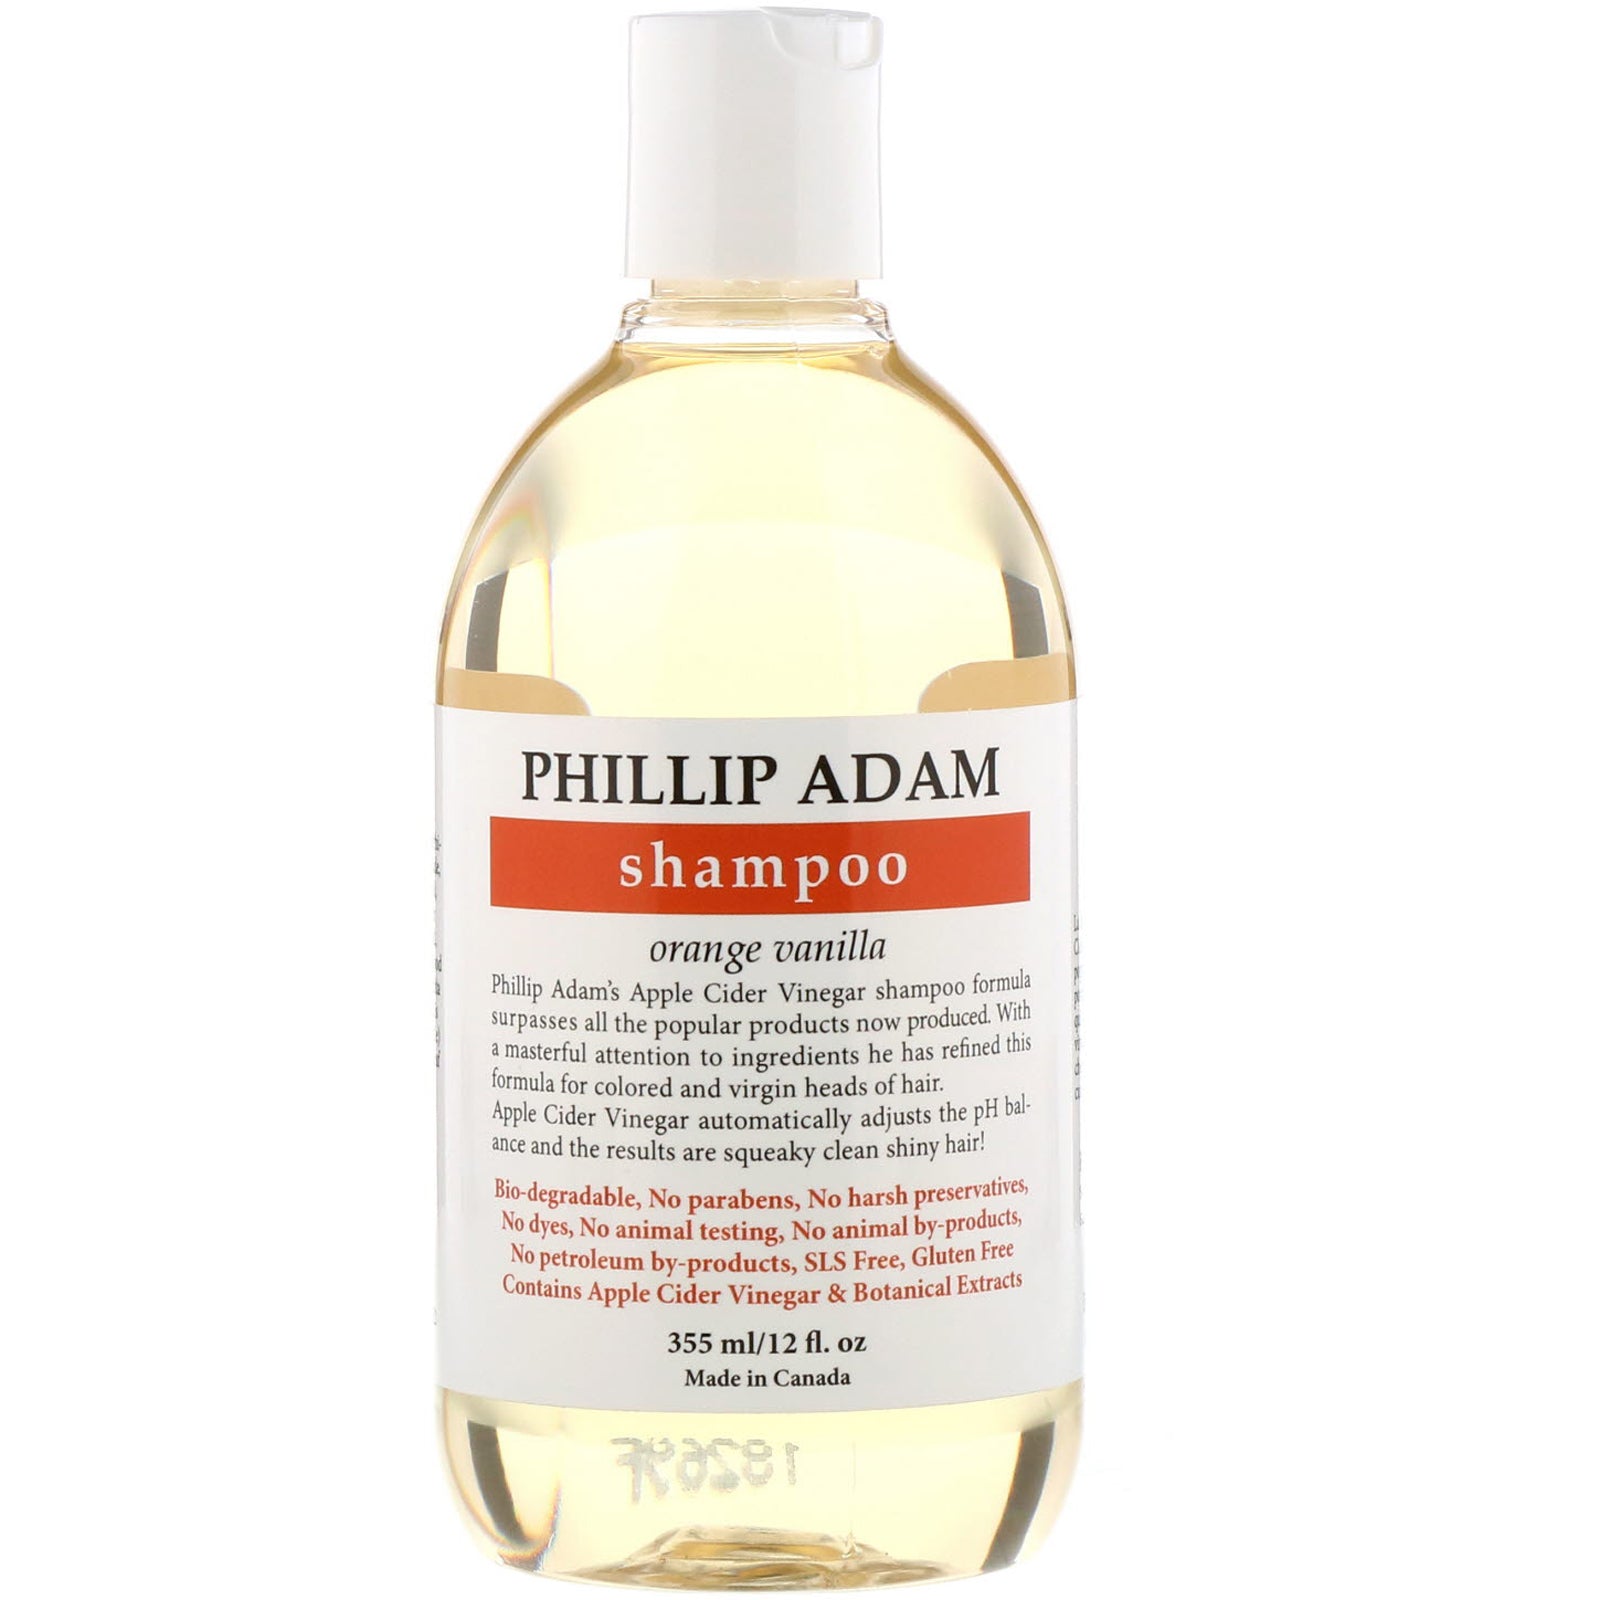 Phillip Adam, Shampoo, Orange Vanilla, 12 fl oz (355 ml)